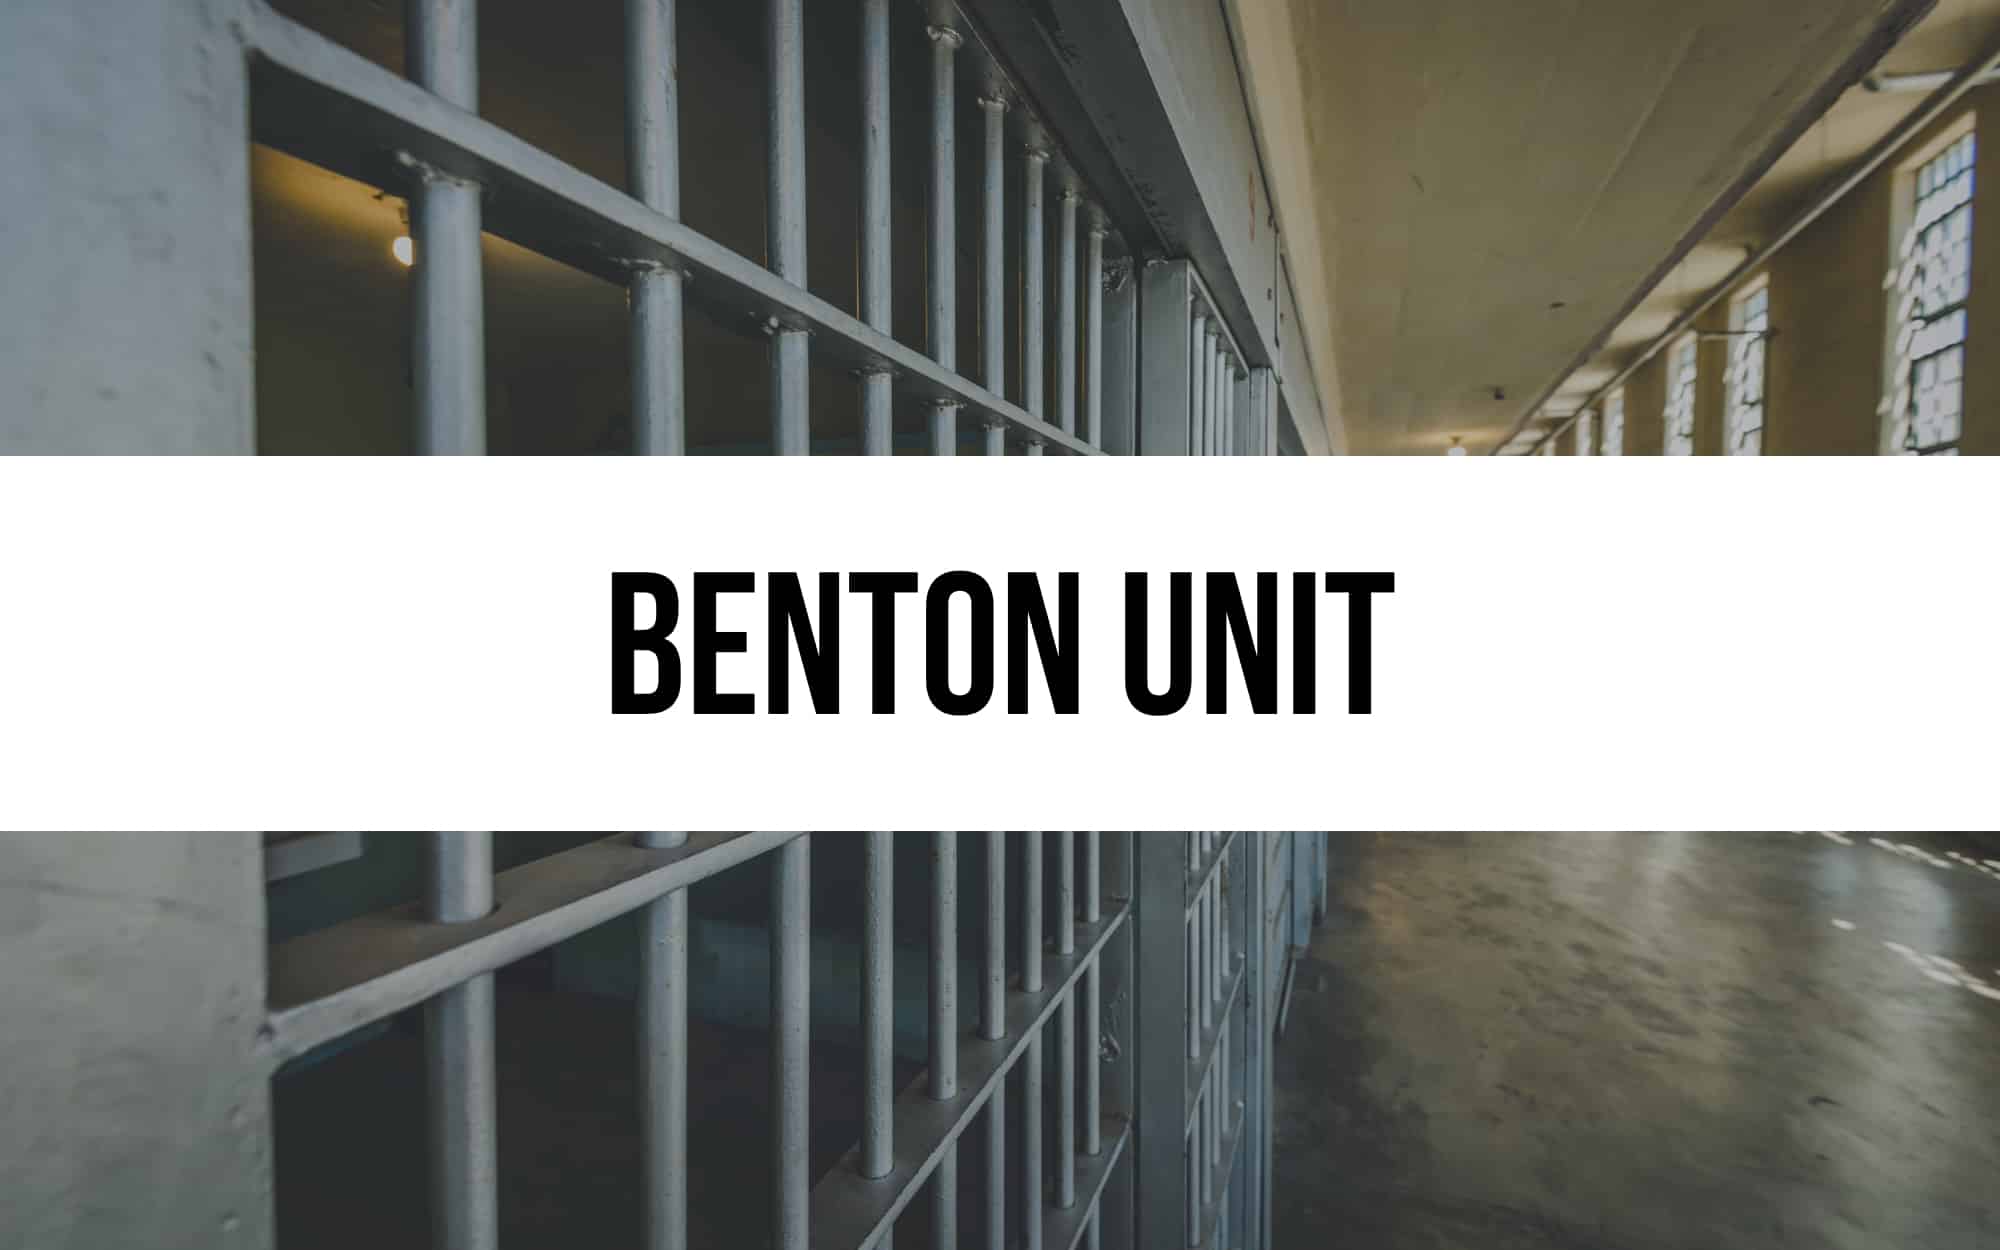 Benton Unit